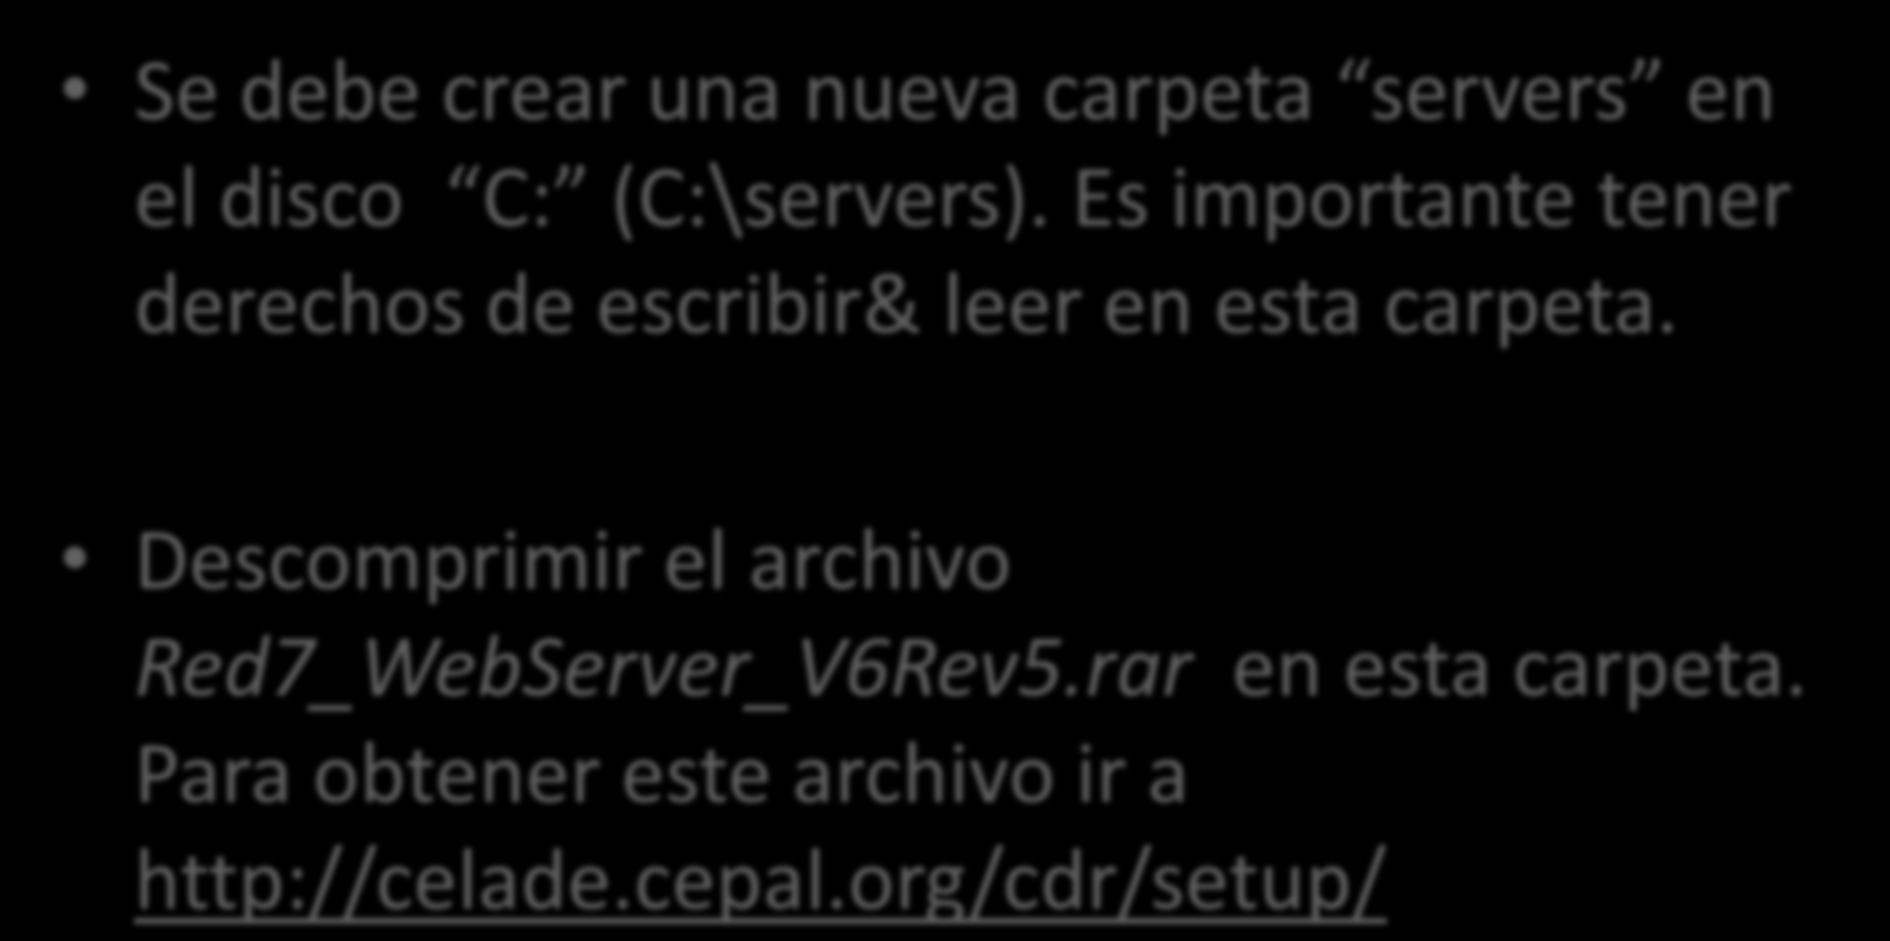 How do I start? Se debe crear una nueva carpeta servers en el disco C: (C:\servers).